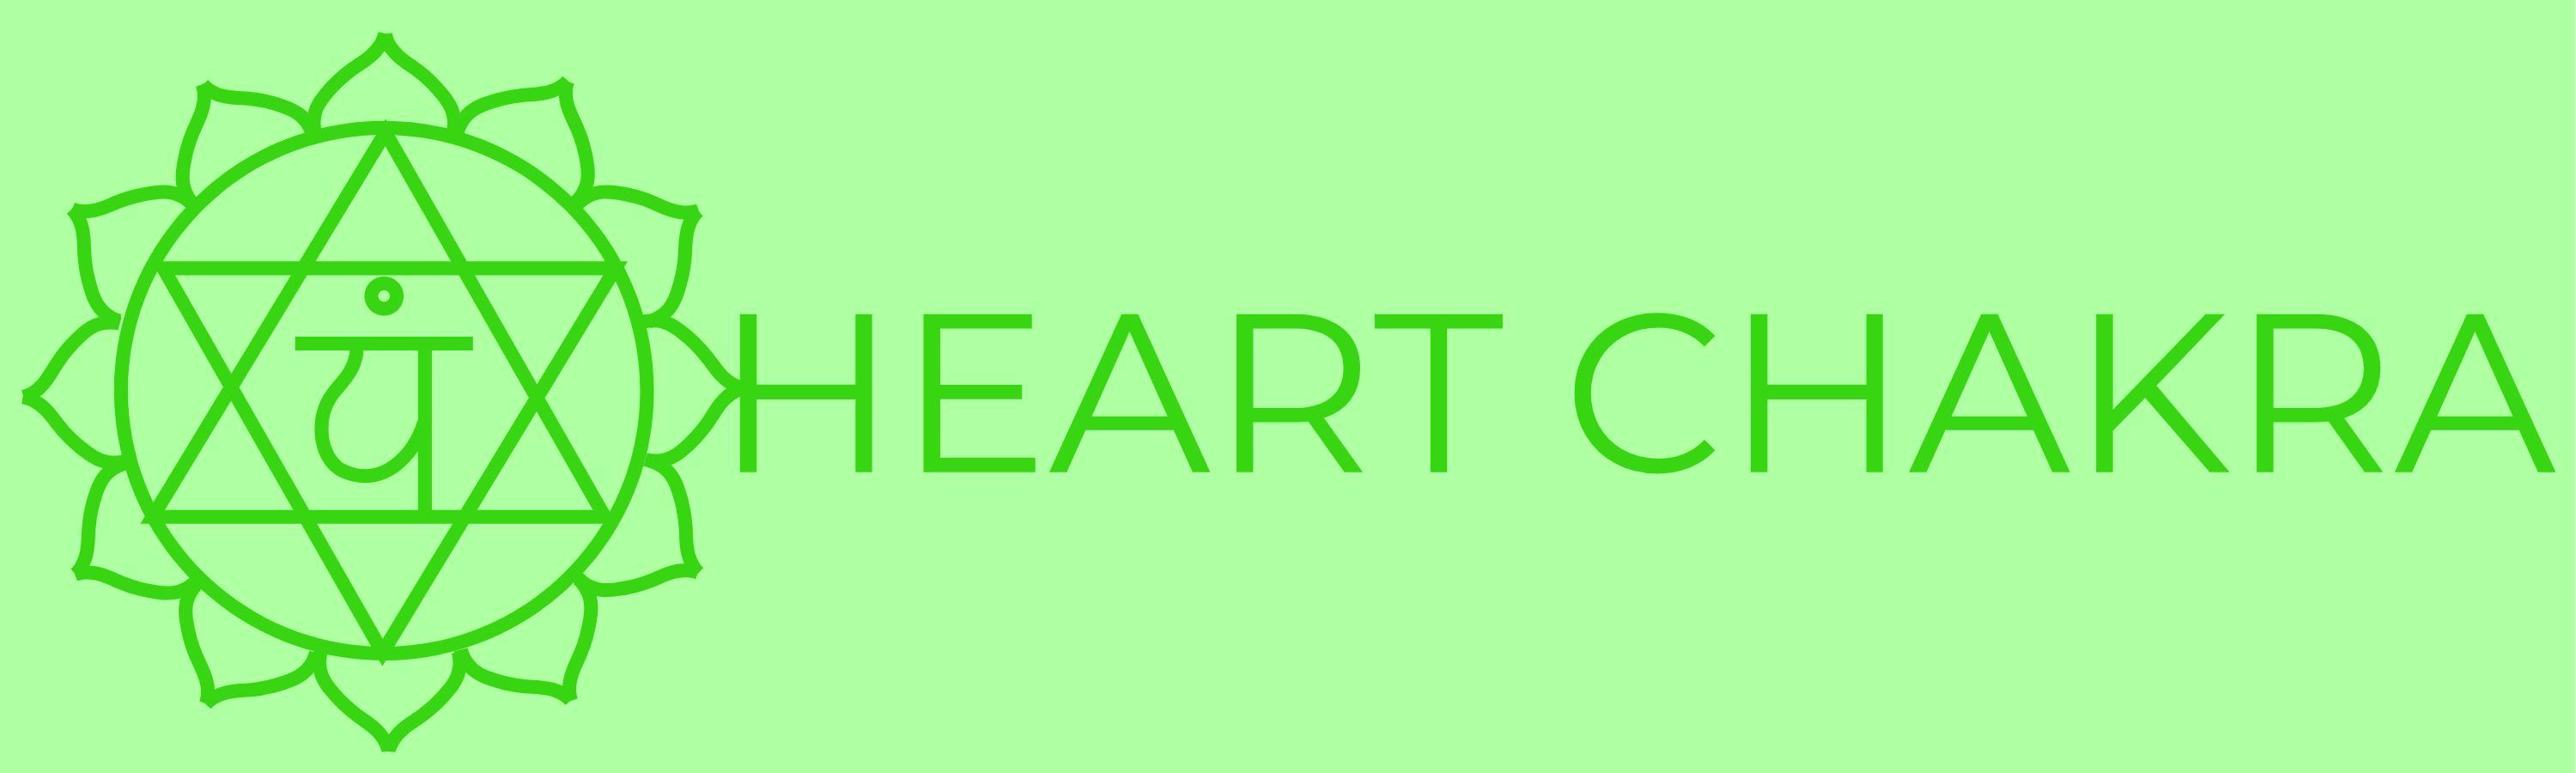 Heart chakra symbol on green banner